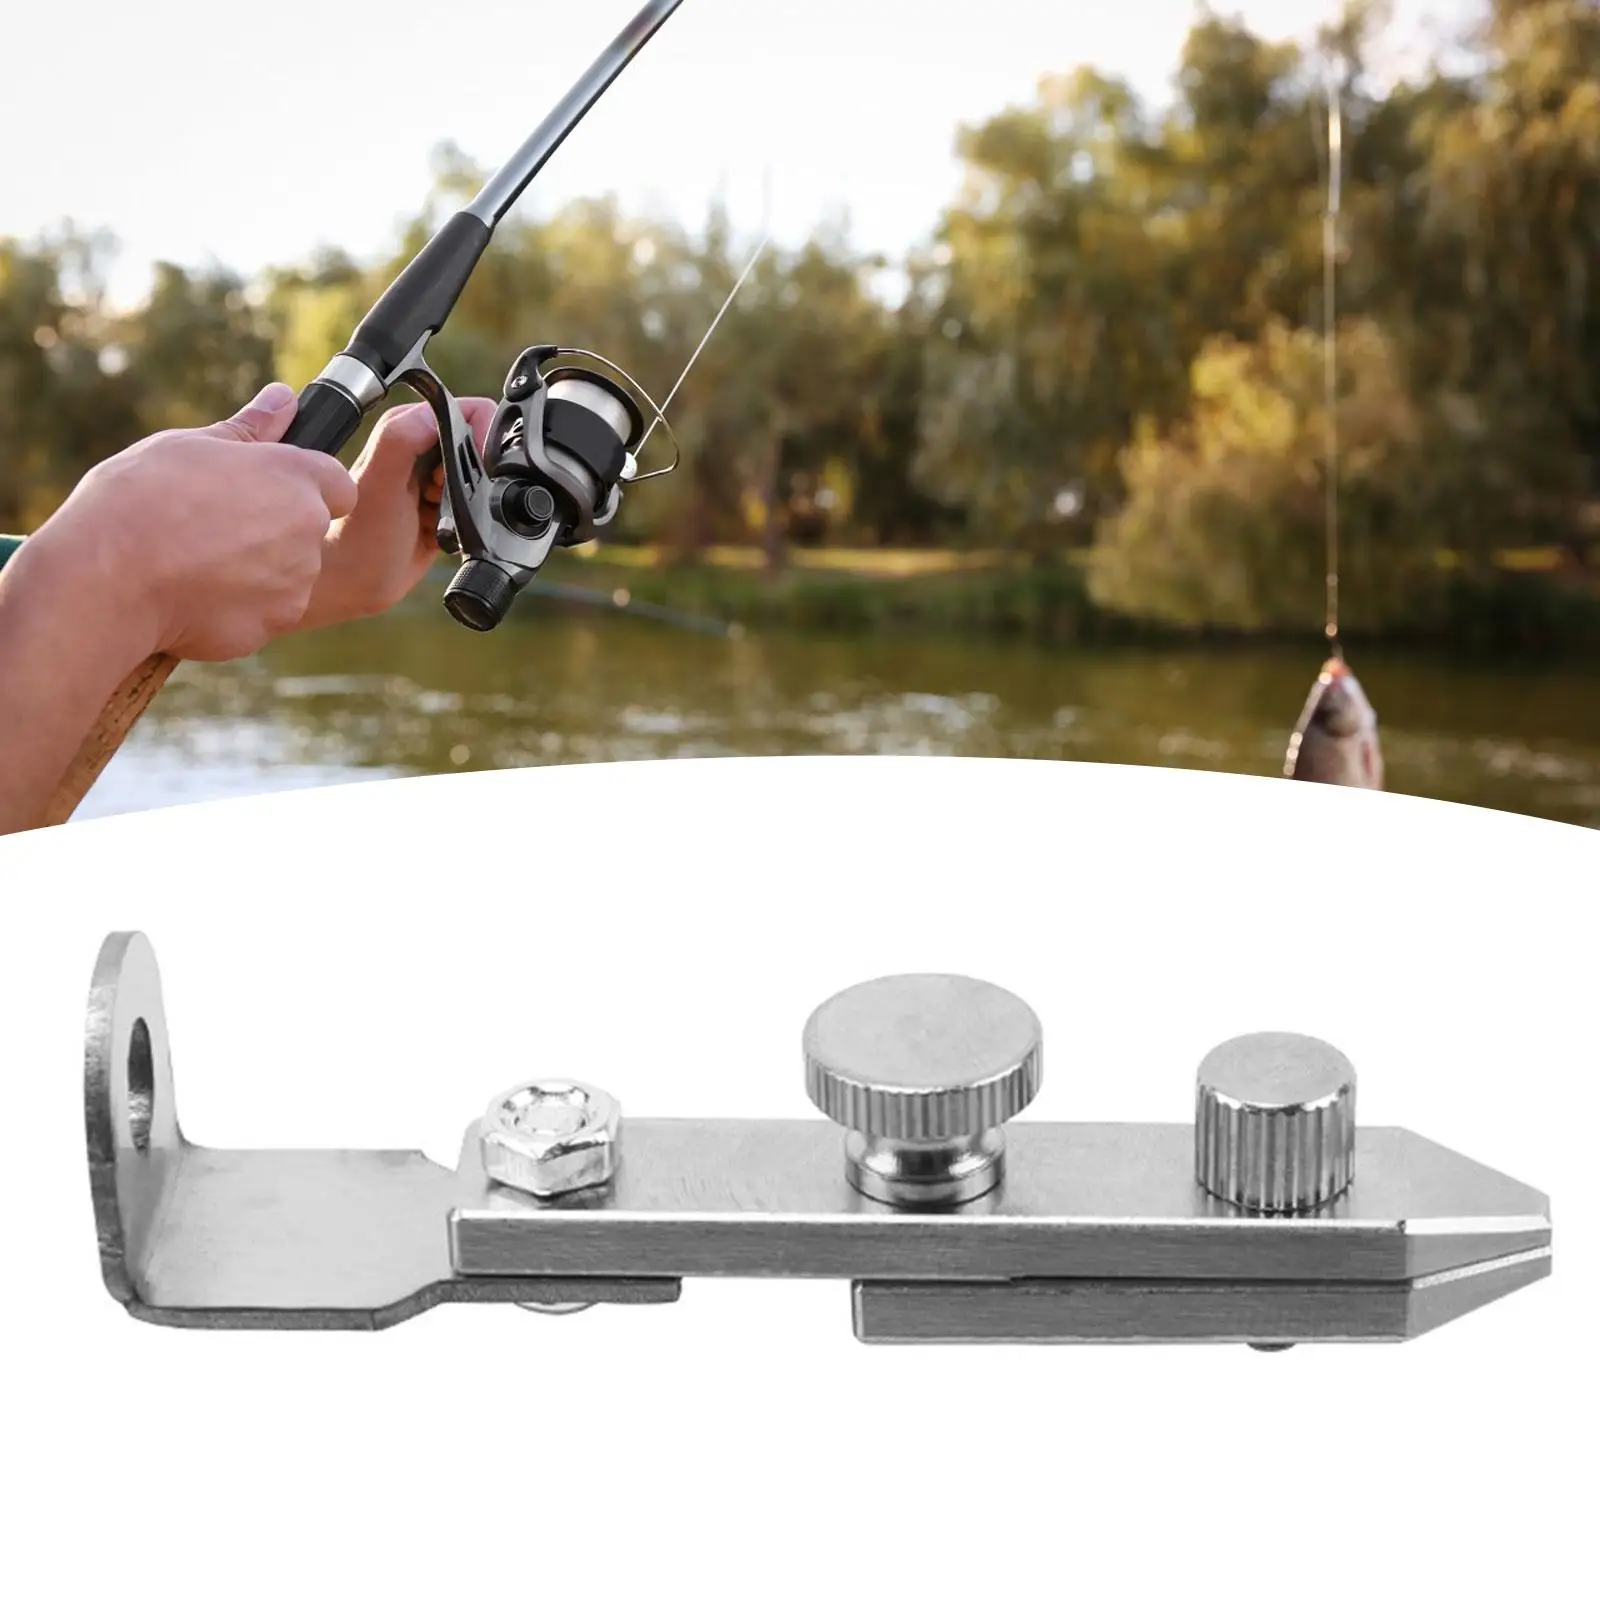 

Fishing Line Knotter Manual Durable Portable Metal Binding Device Supplies Fishing Hook Tying for Coarse Fishing Carp Fishing